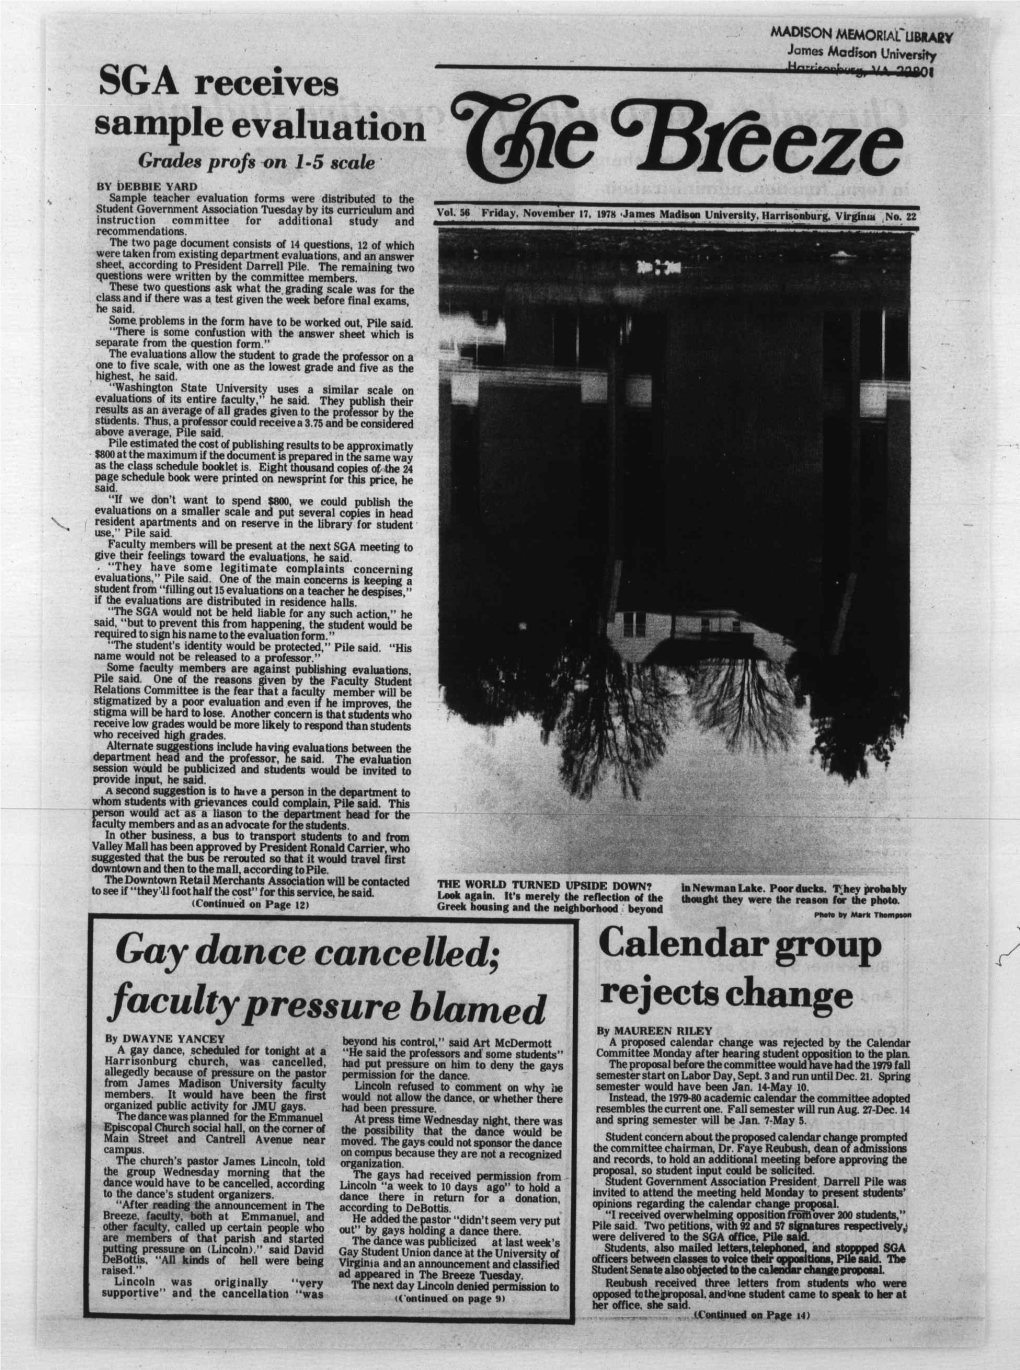 November 17, 1978 James Madison University, Llarrisonbure, Virginia No